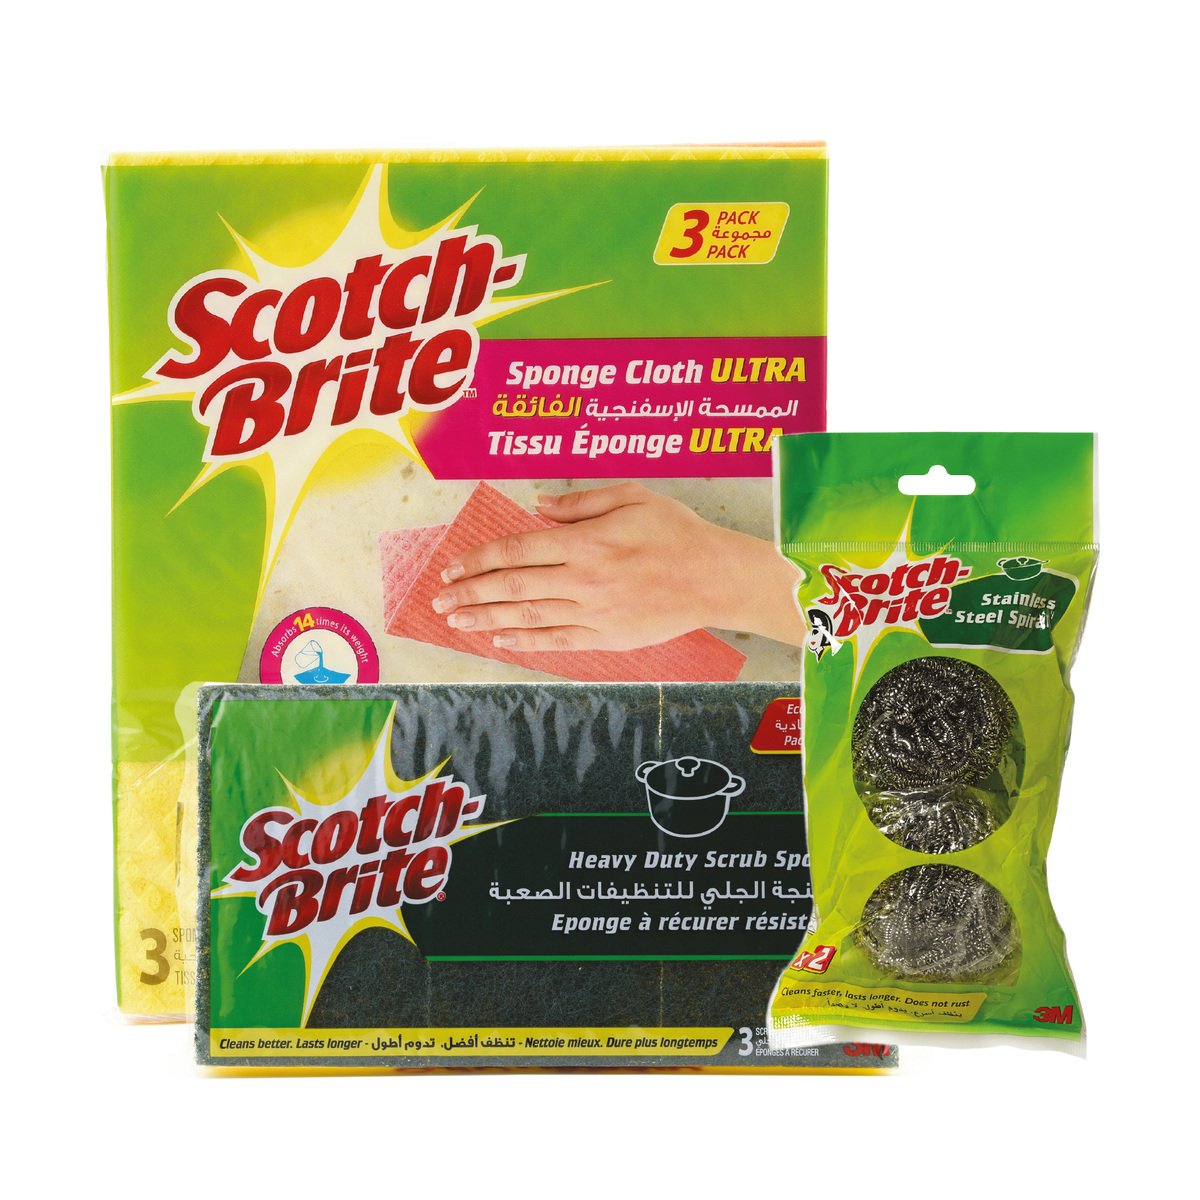 Scotch Brite Laminates 3 pcs + Stainless Steel Spiral 2 pcs + Sponge Cloth 3 pcs